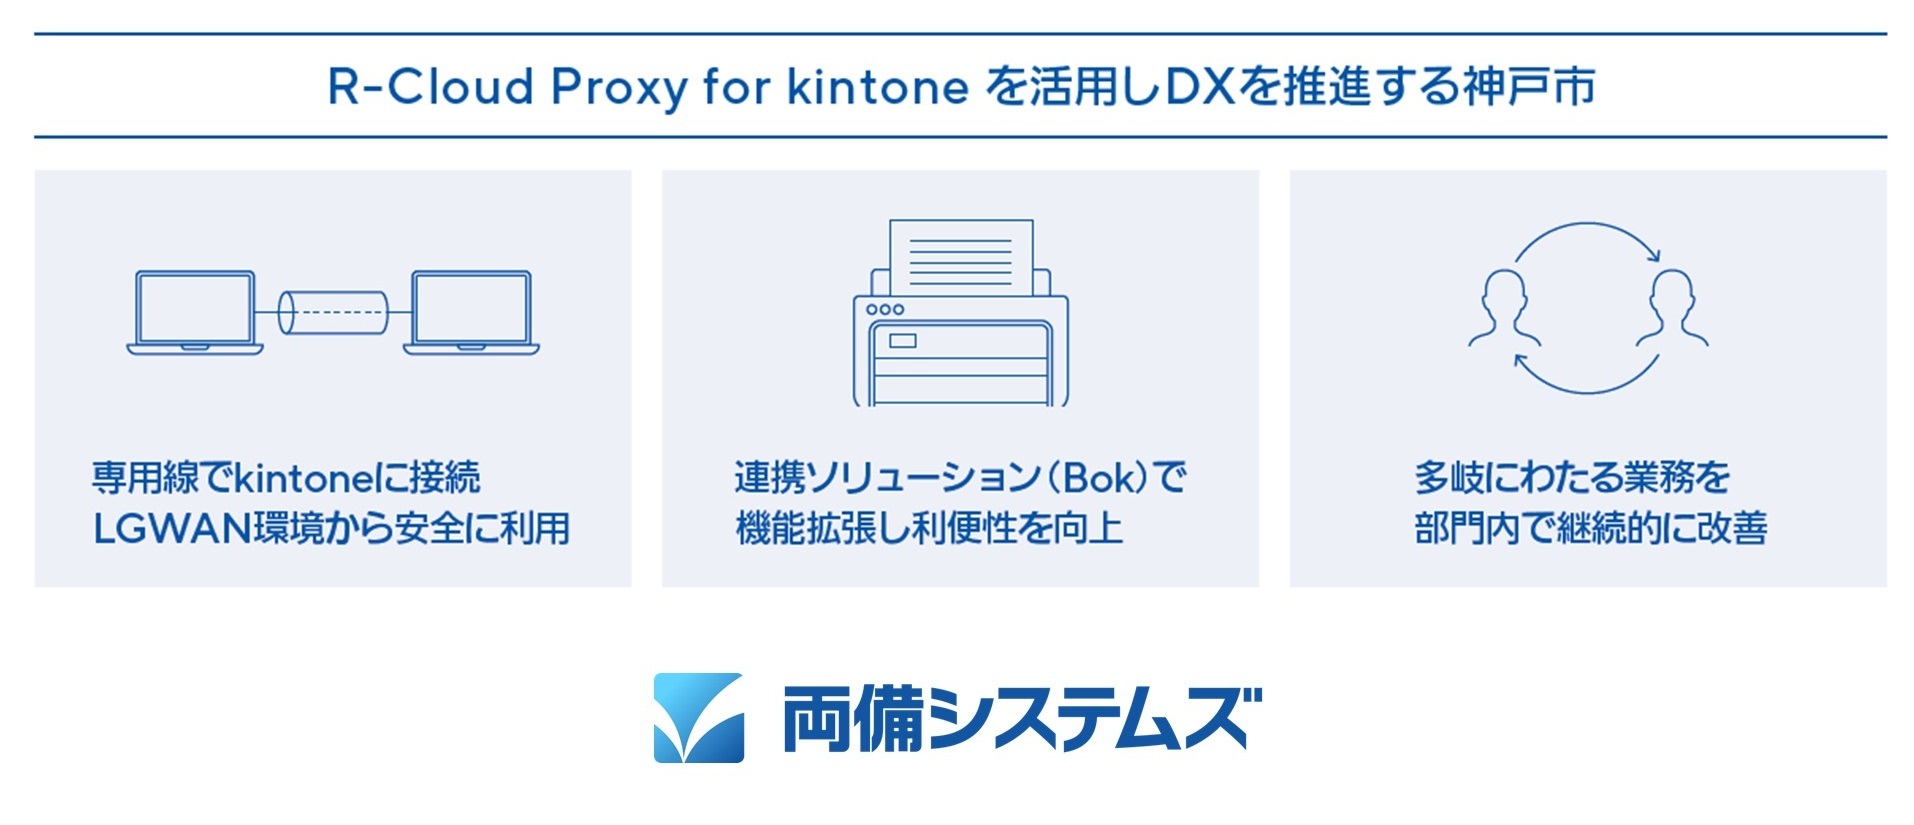 _ˎsR-Cloud Proxy for kintoneJ@`LGWANkintone(Lg[)p\ƂȂAYƋƖ`